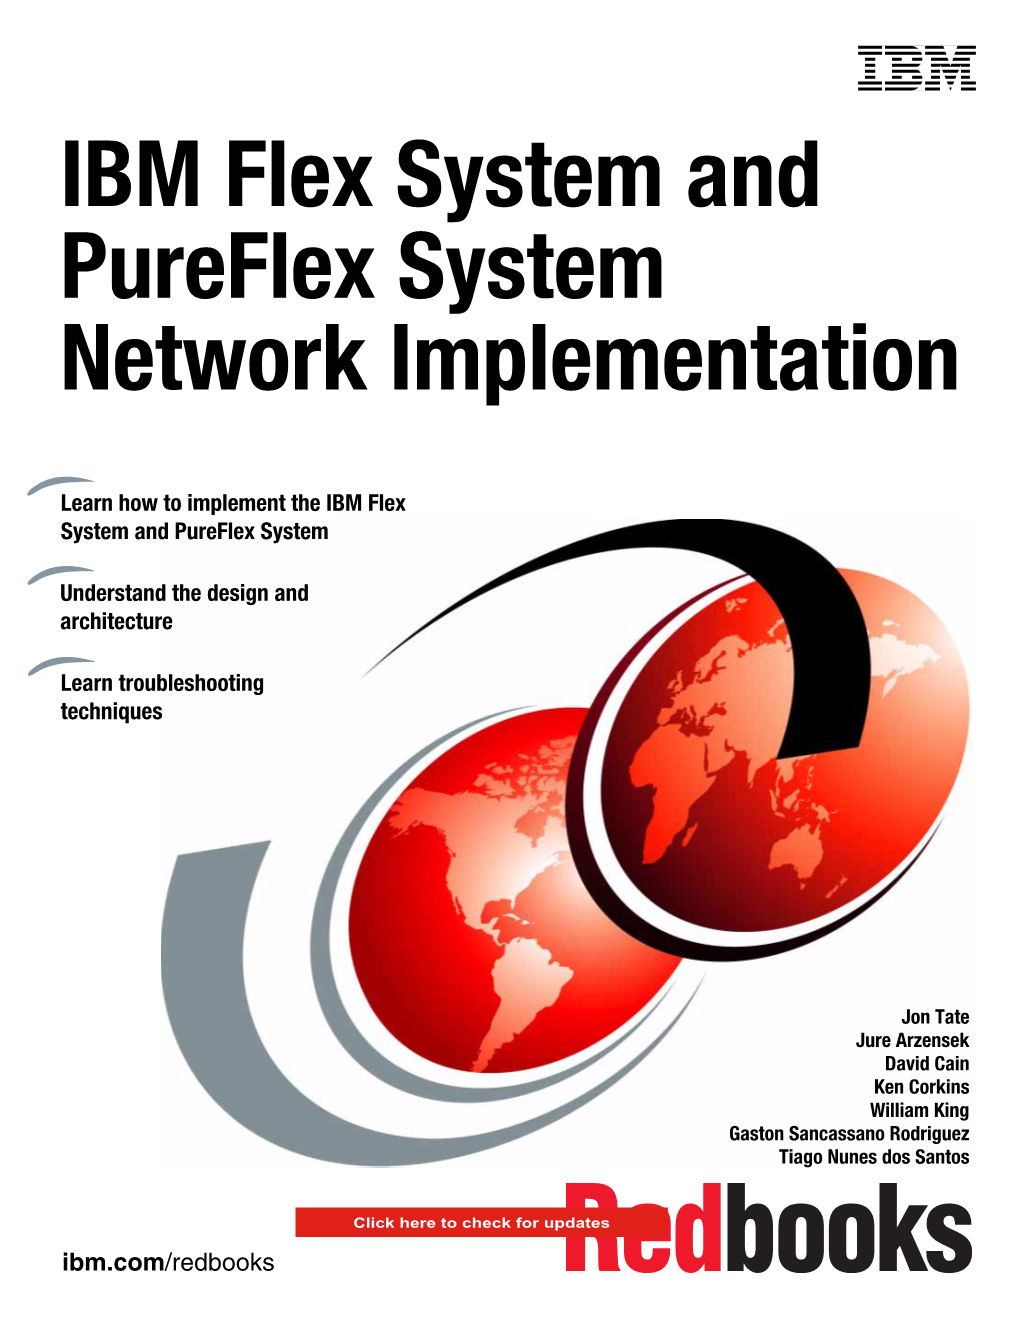 IBM Flex System and Pureflex System Network Implementation